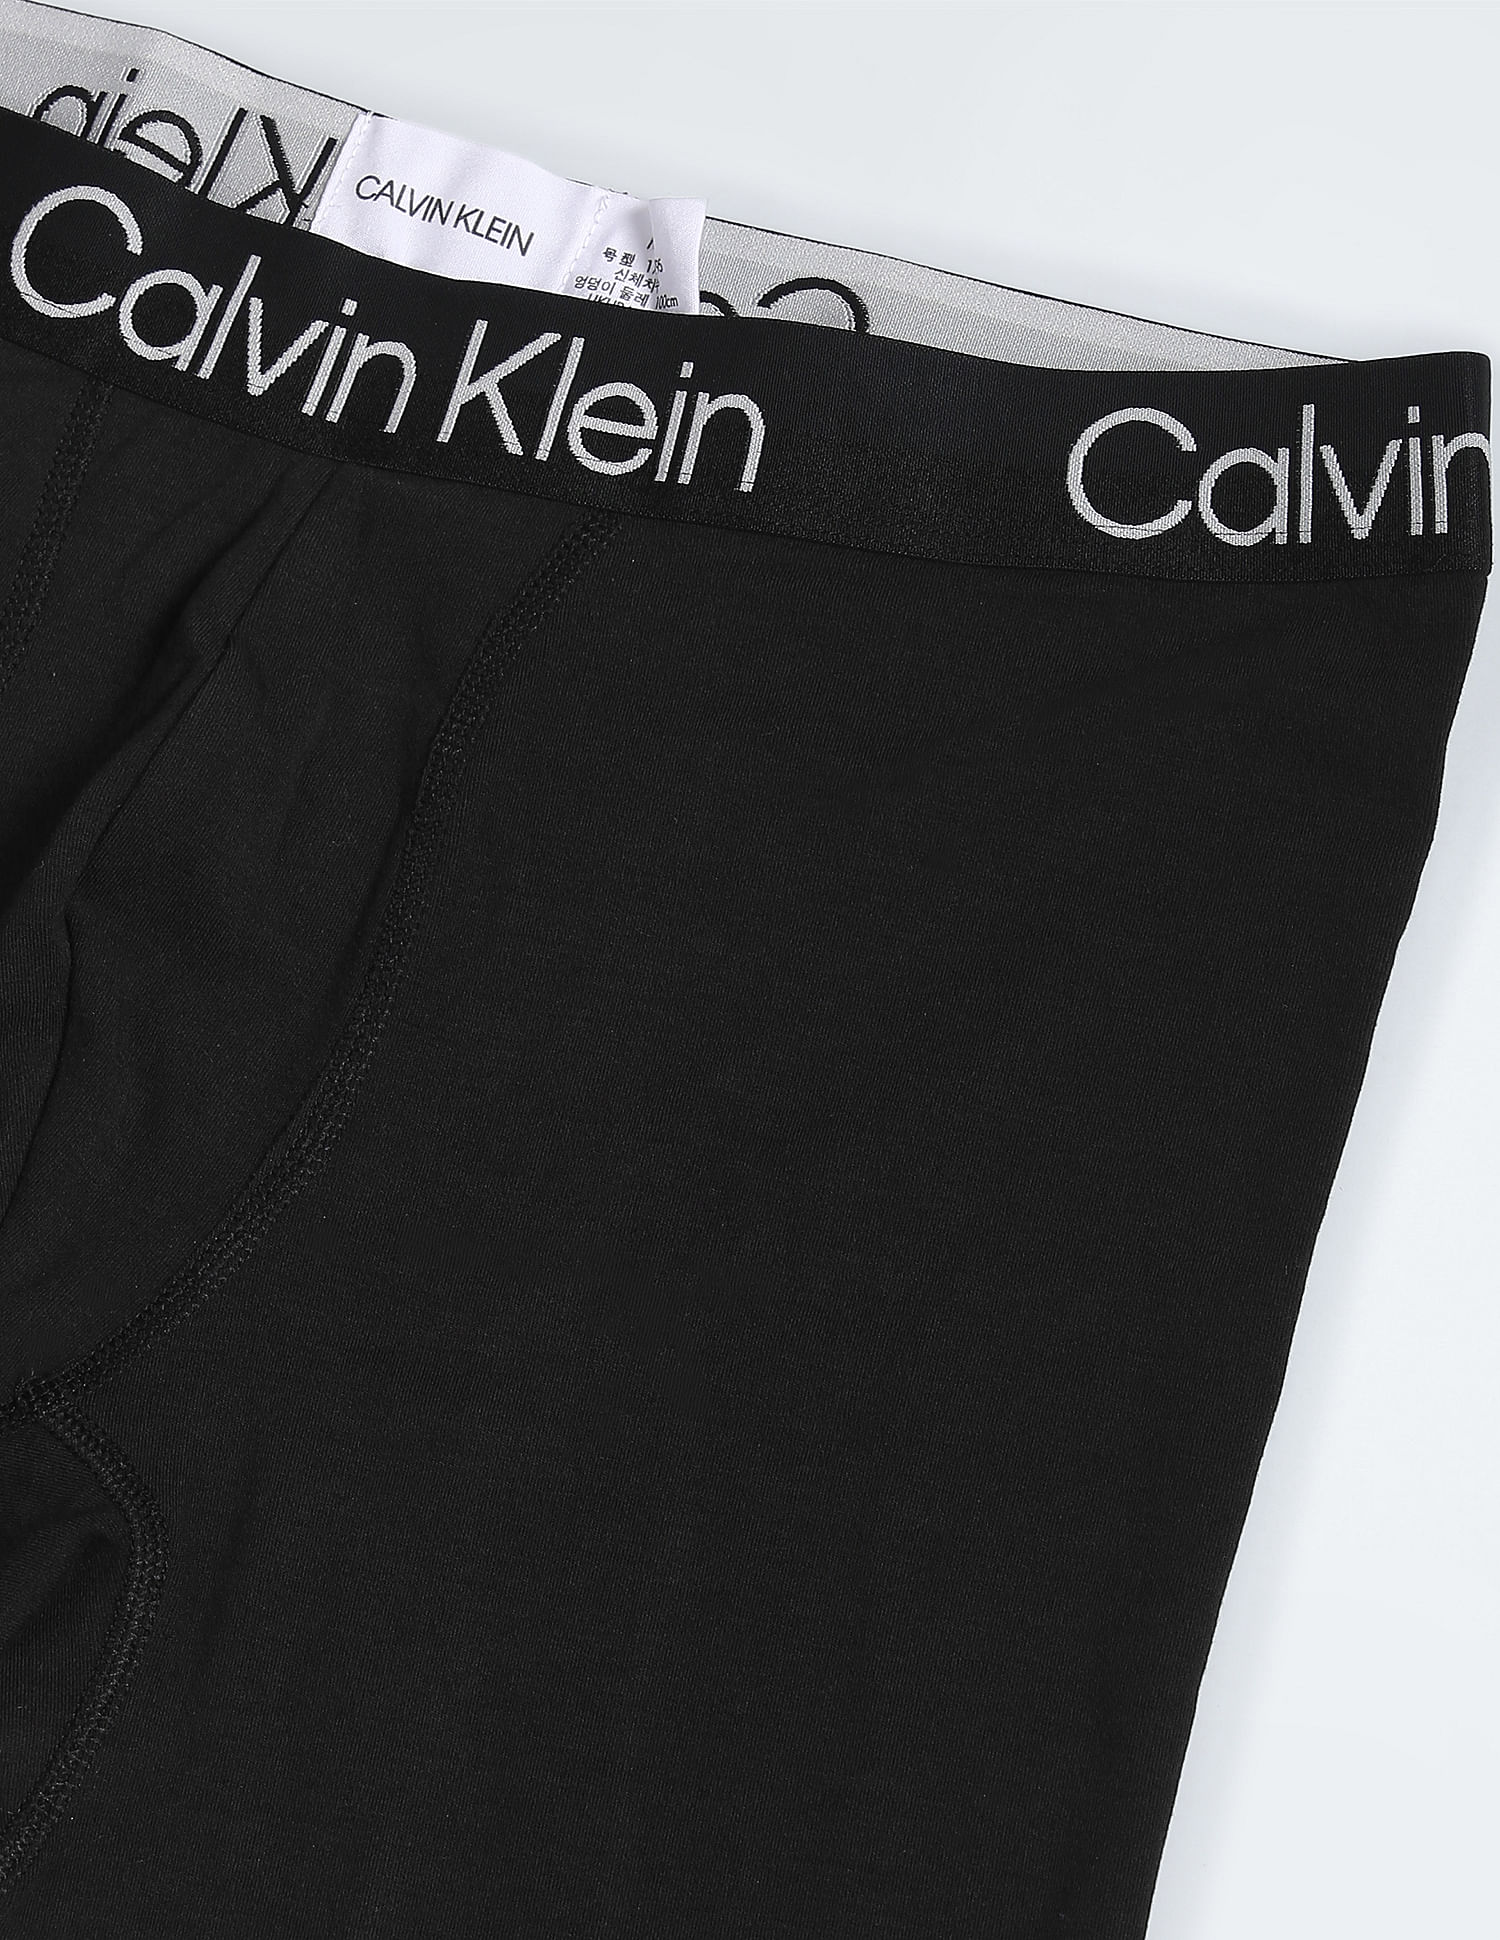 Calvin Klein, Intimates & Sleepwear